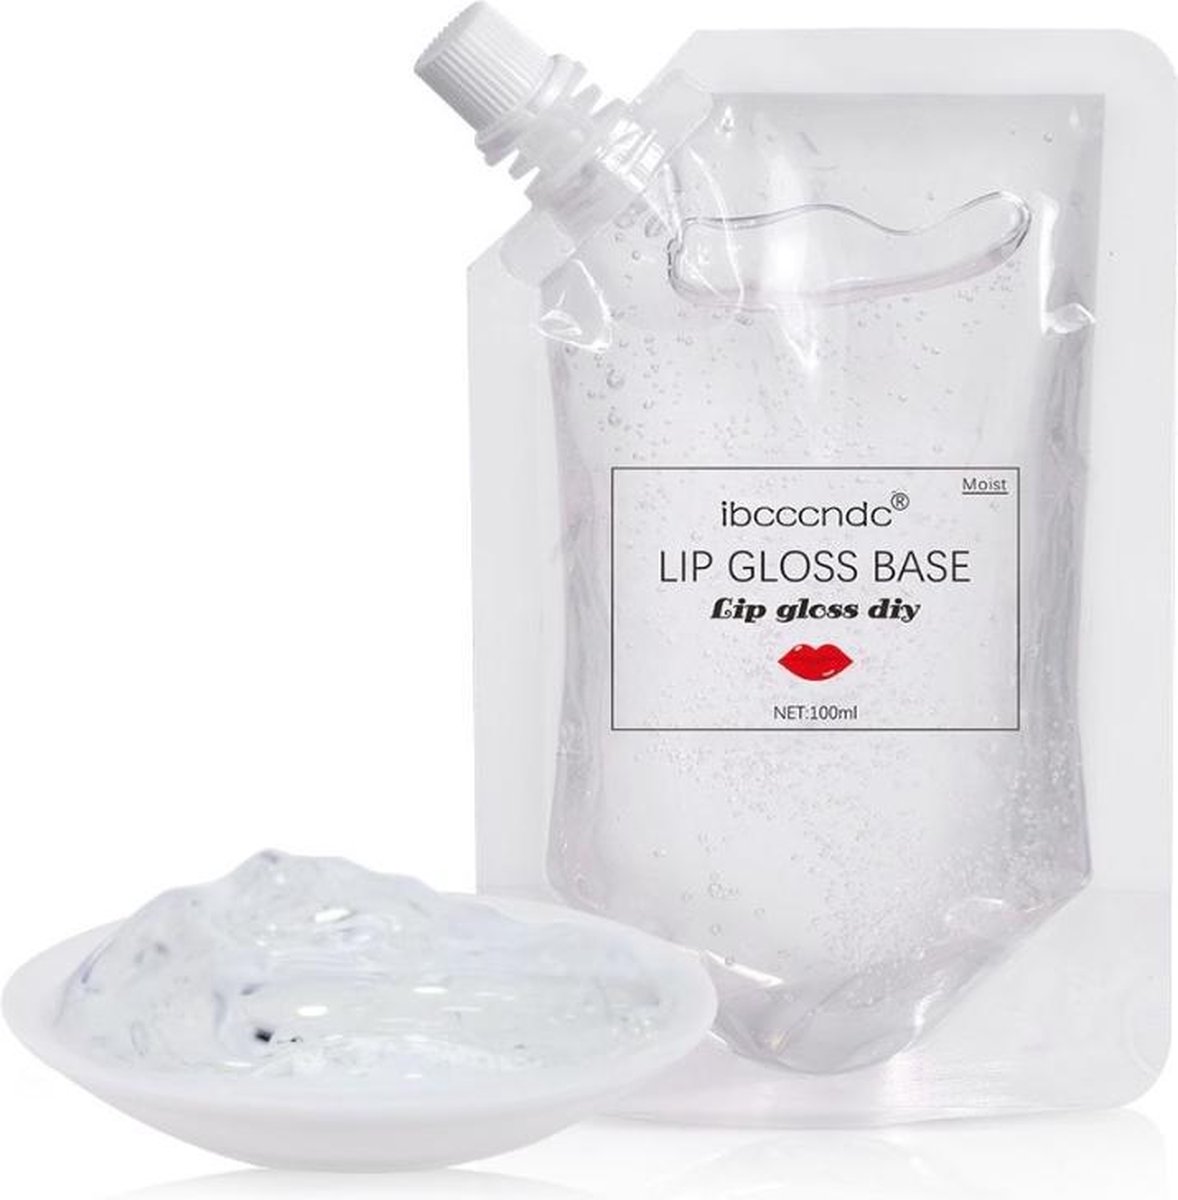 LipGloss Base 100ml - Basis om zelf lipgloss te maken - Lipgloss DIY - Lipgloss maken - Ibcccndc